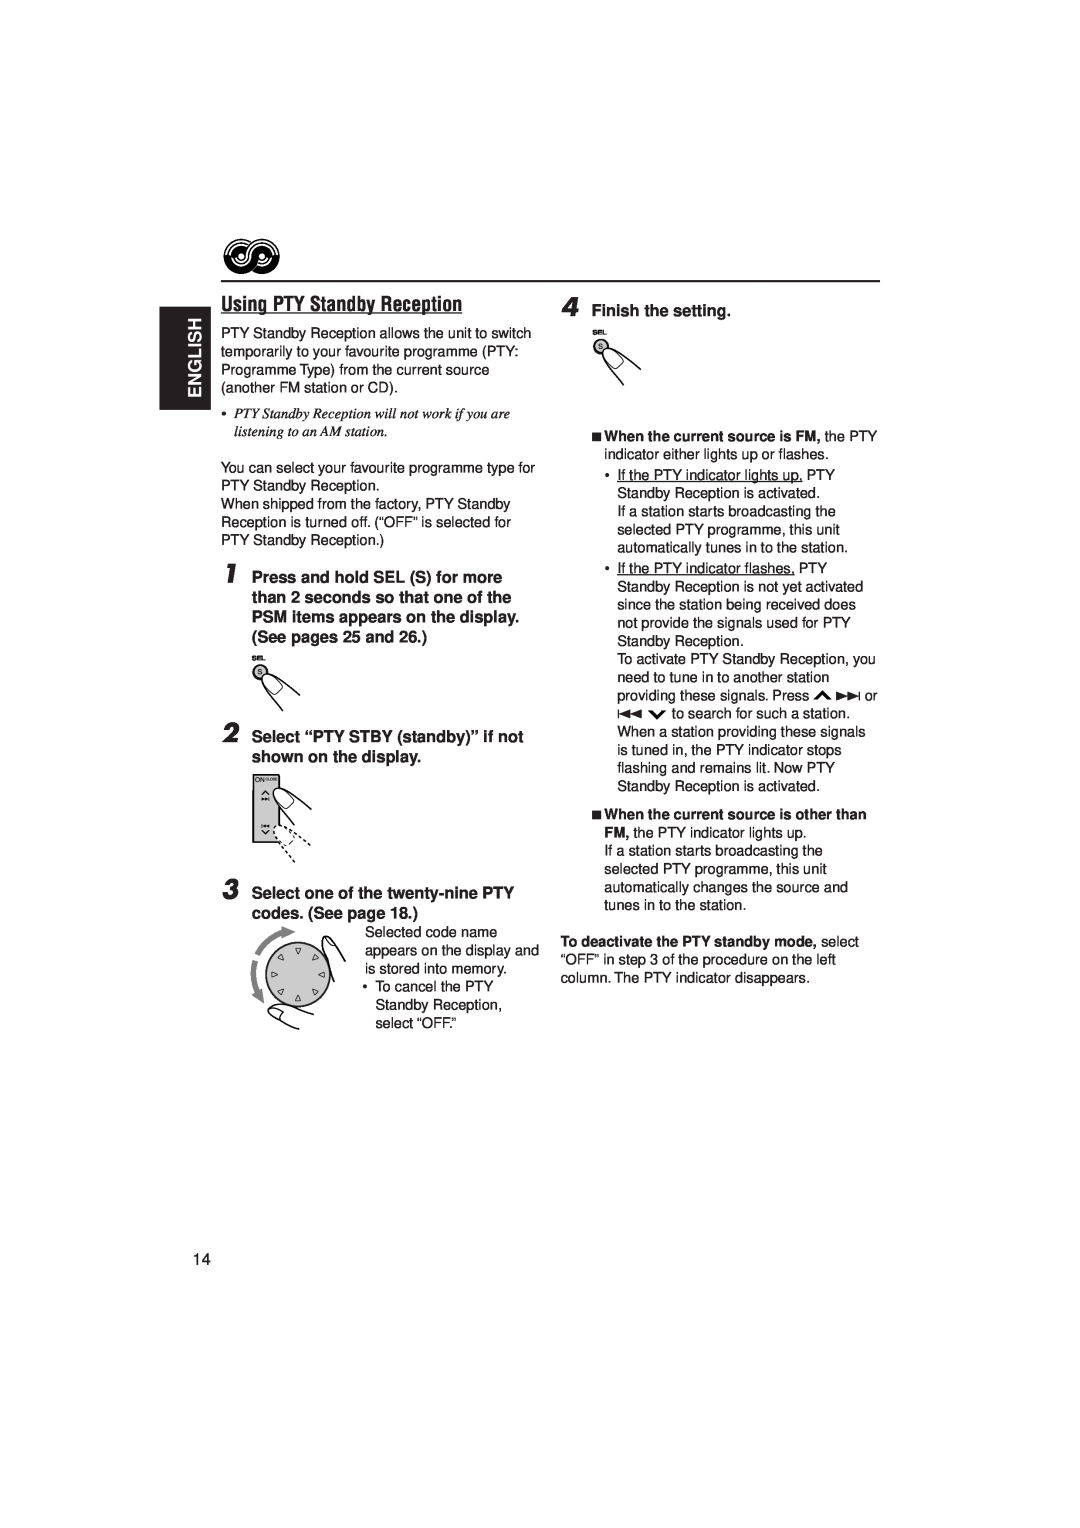 JVC PIM171200 manual Using PTY Standby Reception, English, Finish the setting 